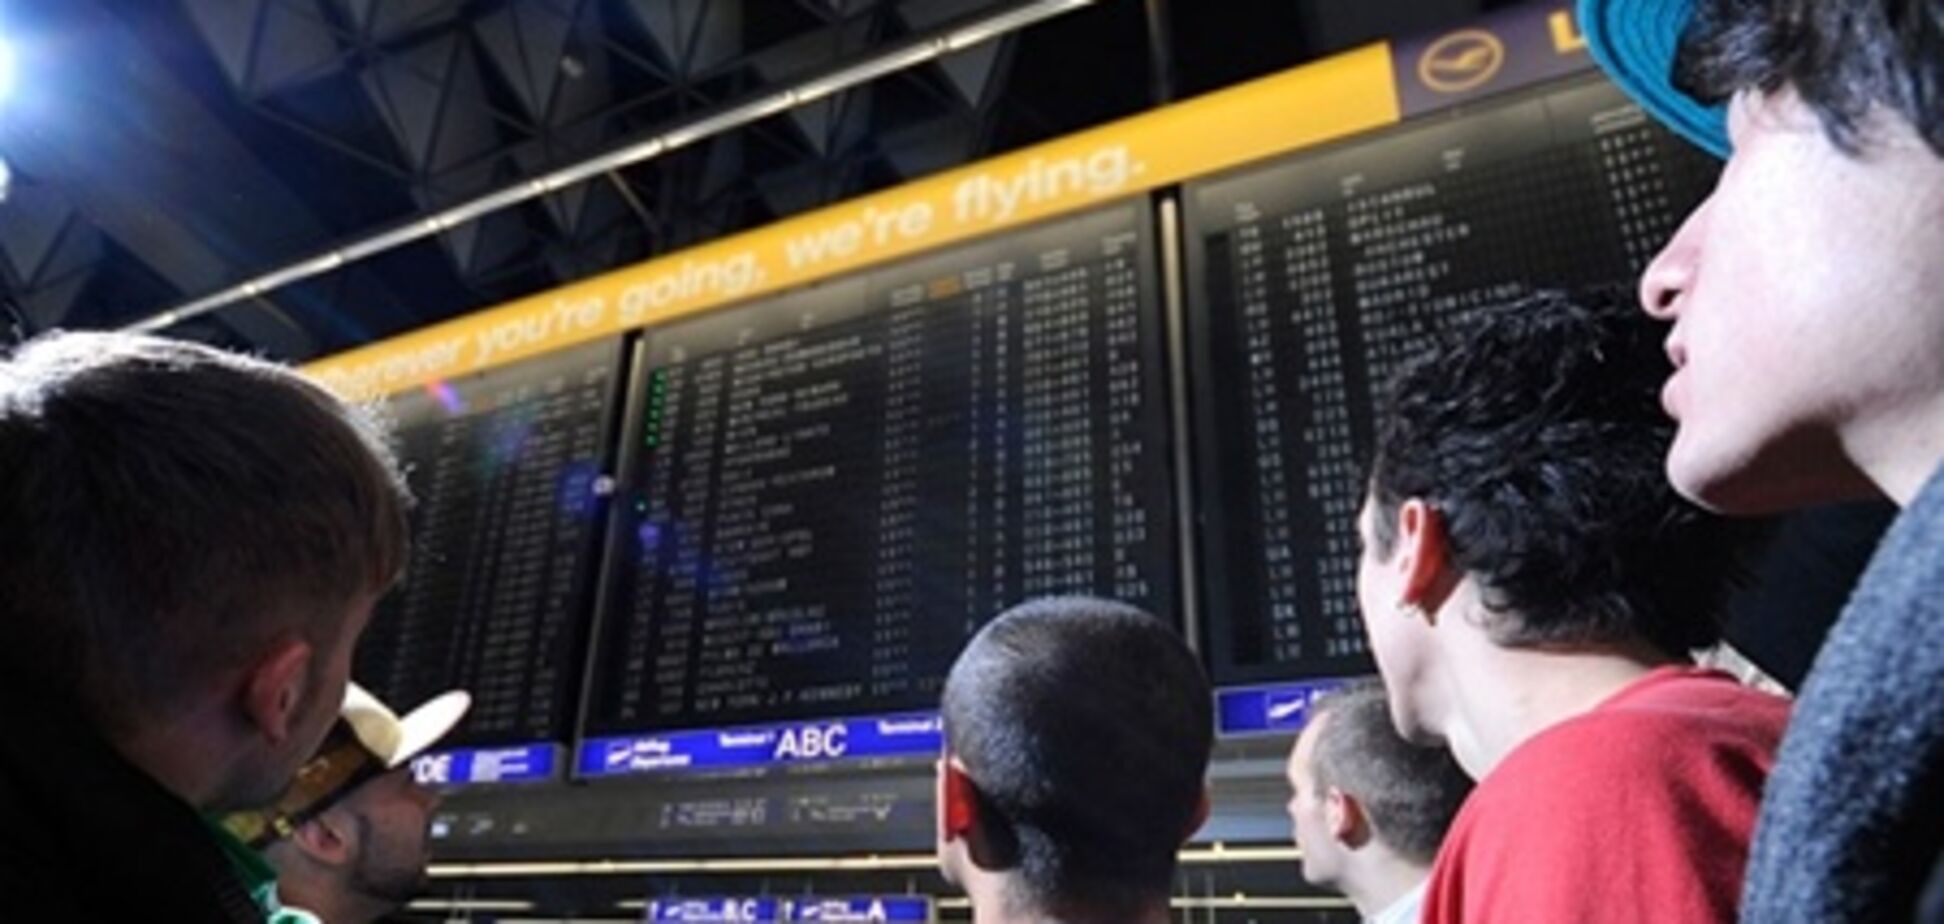 Из-за забастовки во Франкфурте Lufthansa отменила 186 рейсов